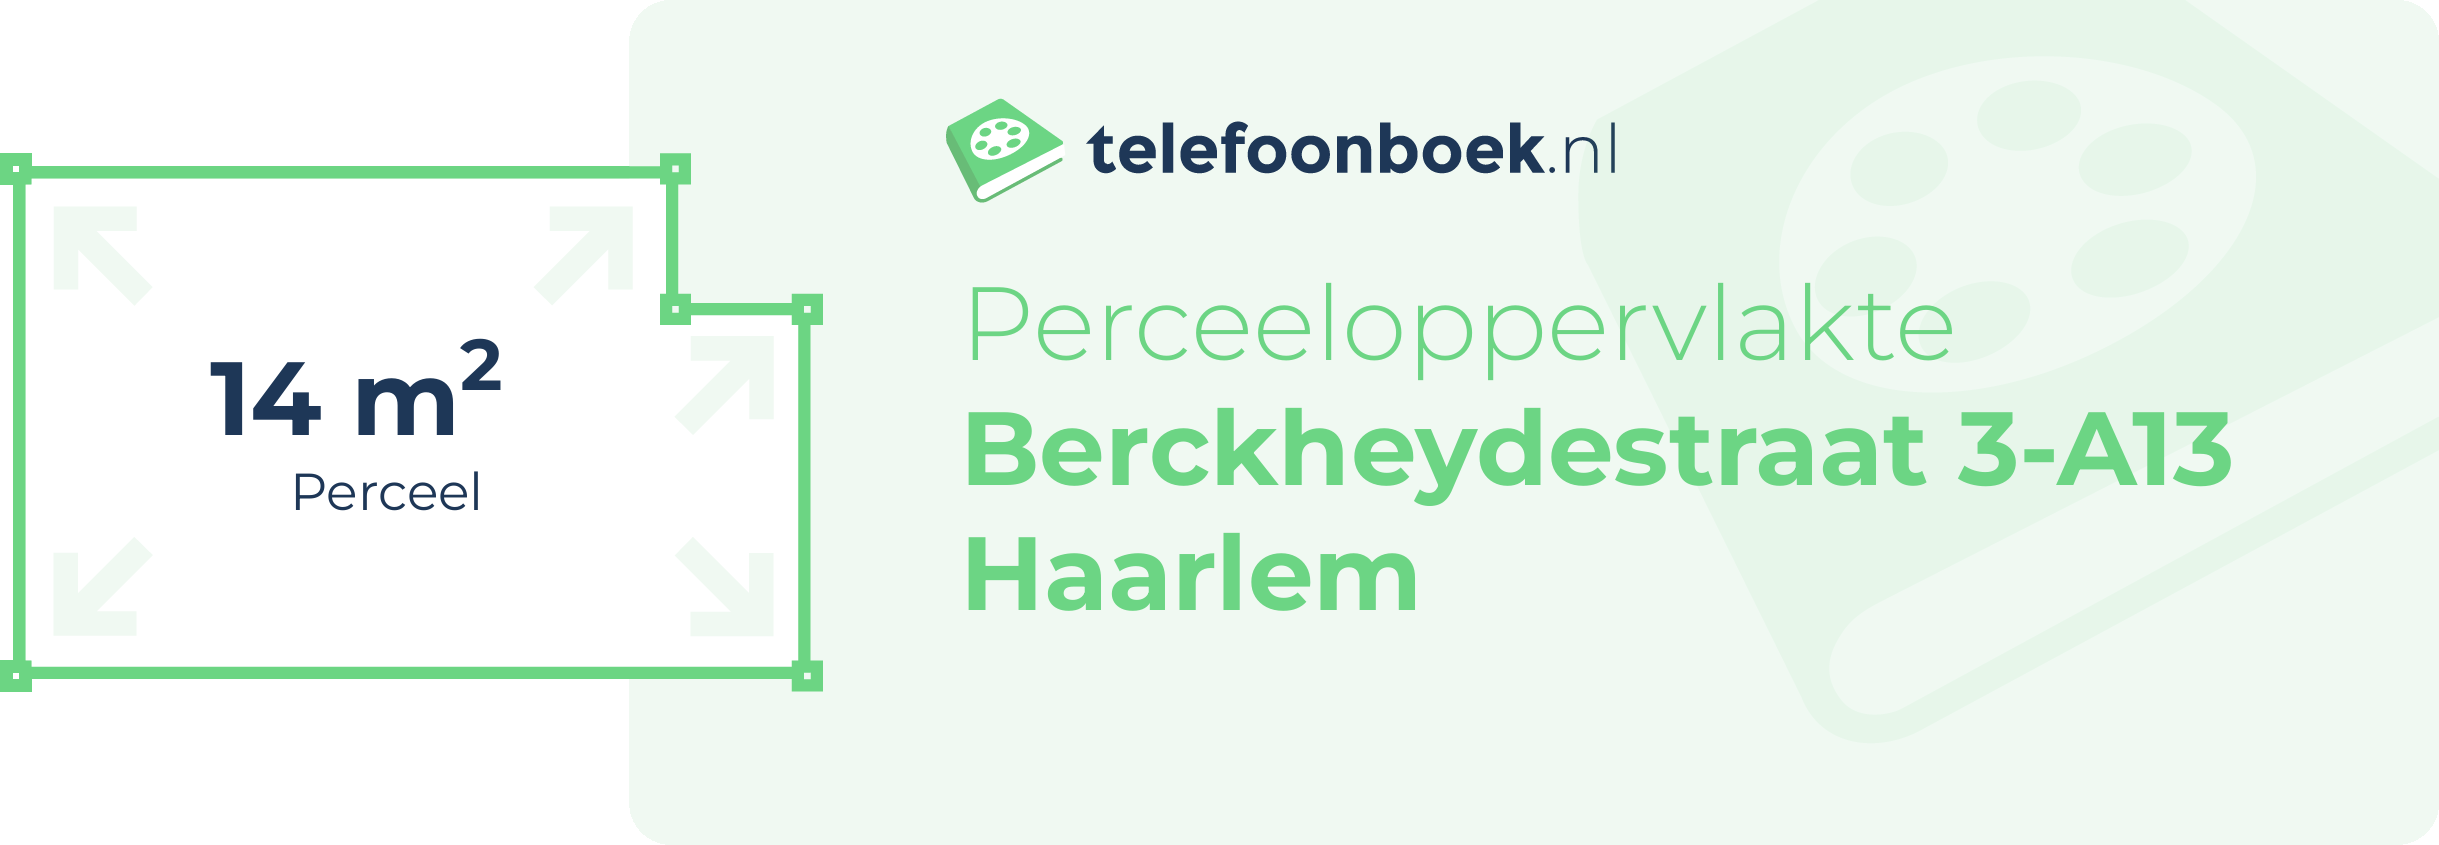 Perceeloppervlakte Berckheydestraat 3-A13 Haarlem